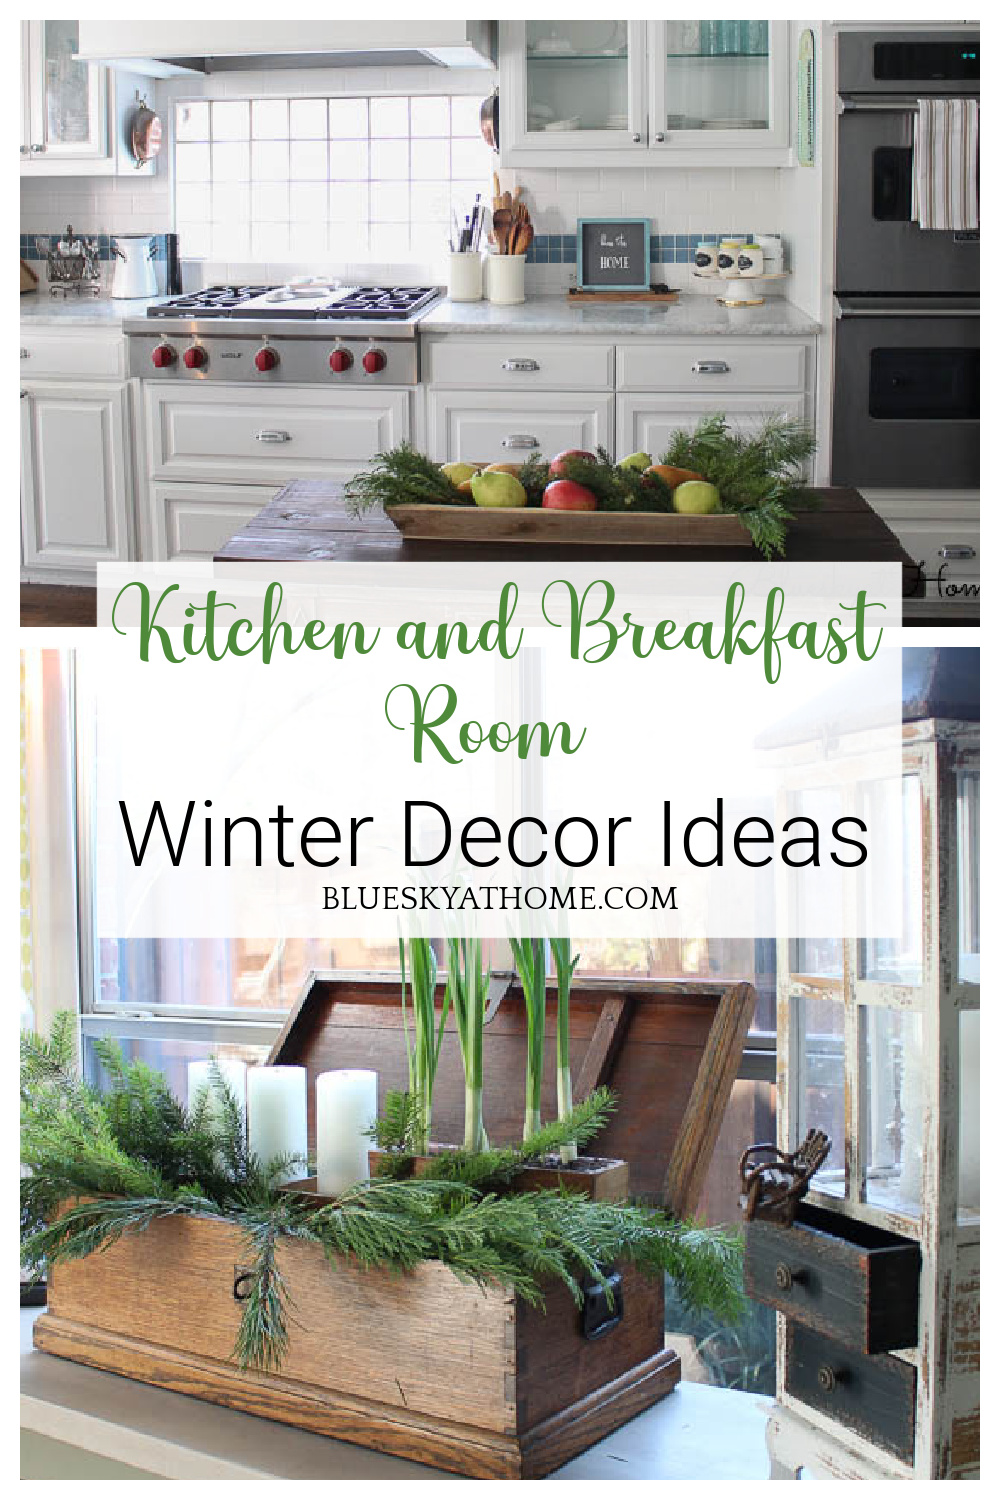 Kitchen and Breakfast Room Winter Decor